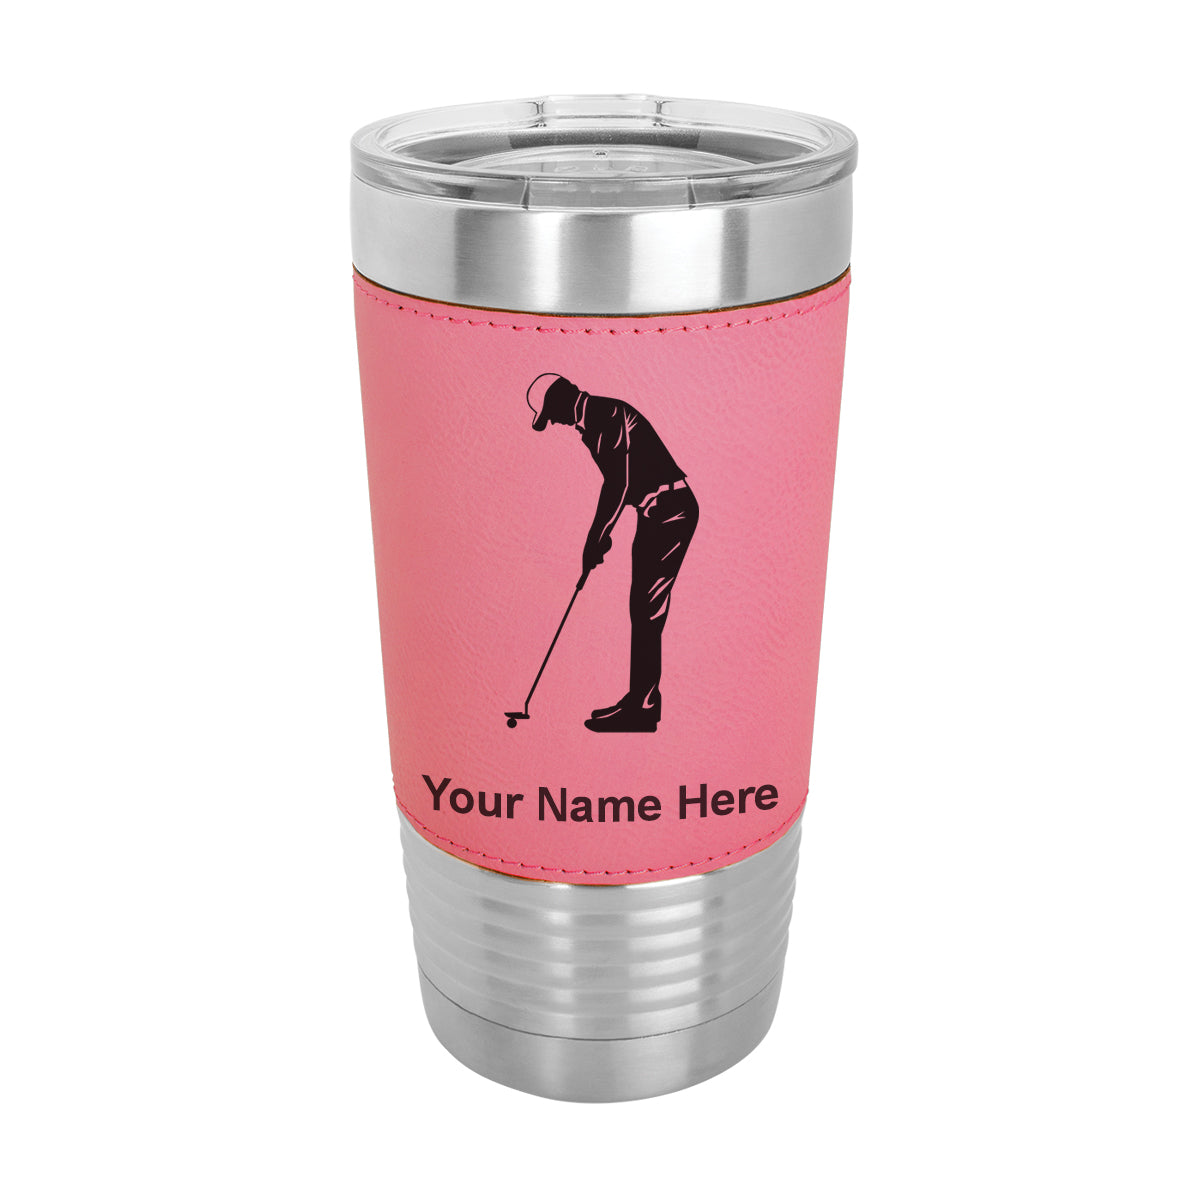 20oz Faux Leather Tumbler Mug, Golfer Putting, Personalized Engraving Included - LaserGram Custom Engraved Gifts